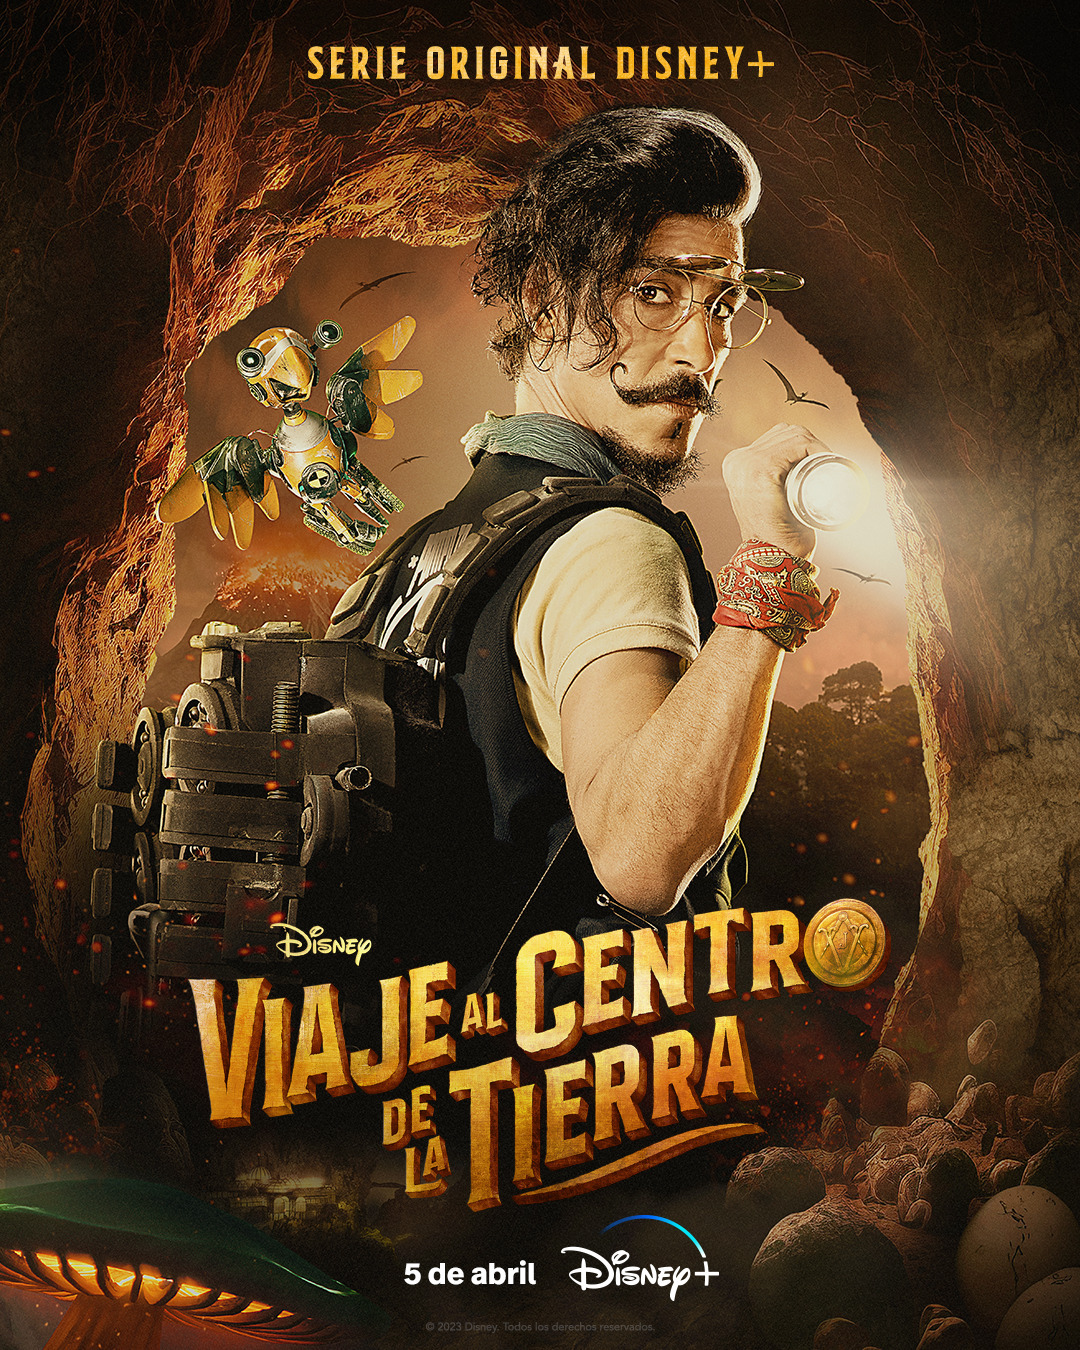 Extra Large TV Poster Image for Viaje al centro de la tierra (#6 of 8)